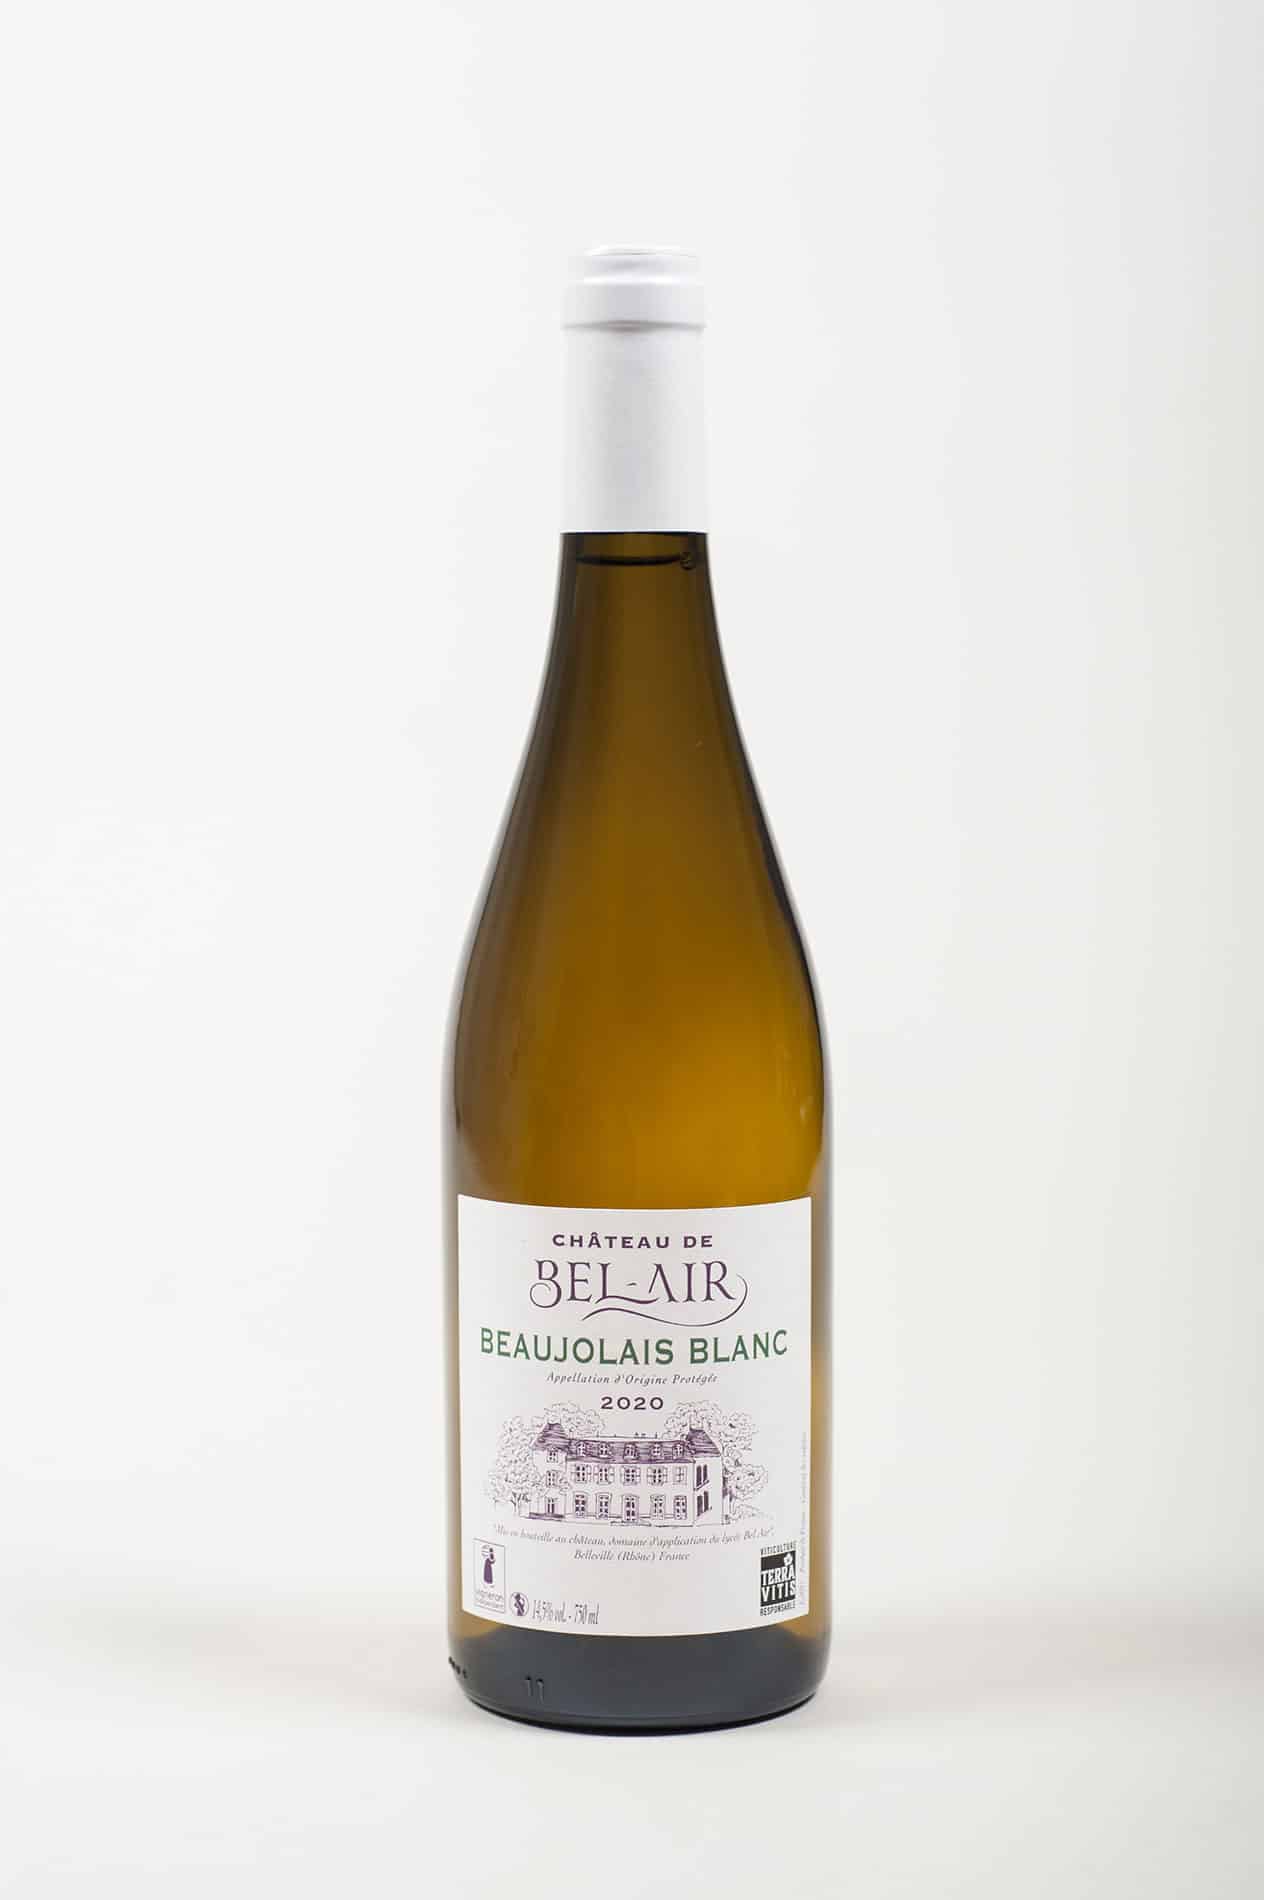 Beaujolais Blanc Chateau De Bel Air 2